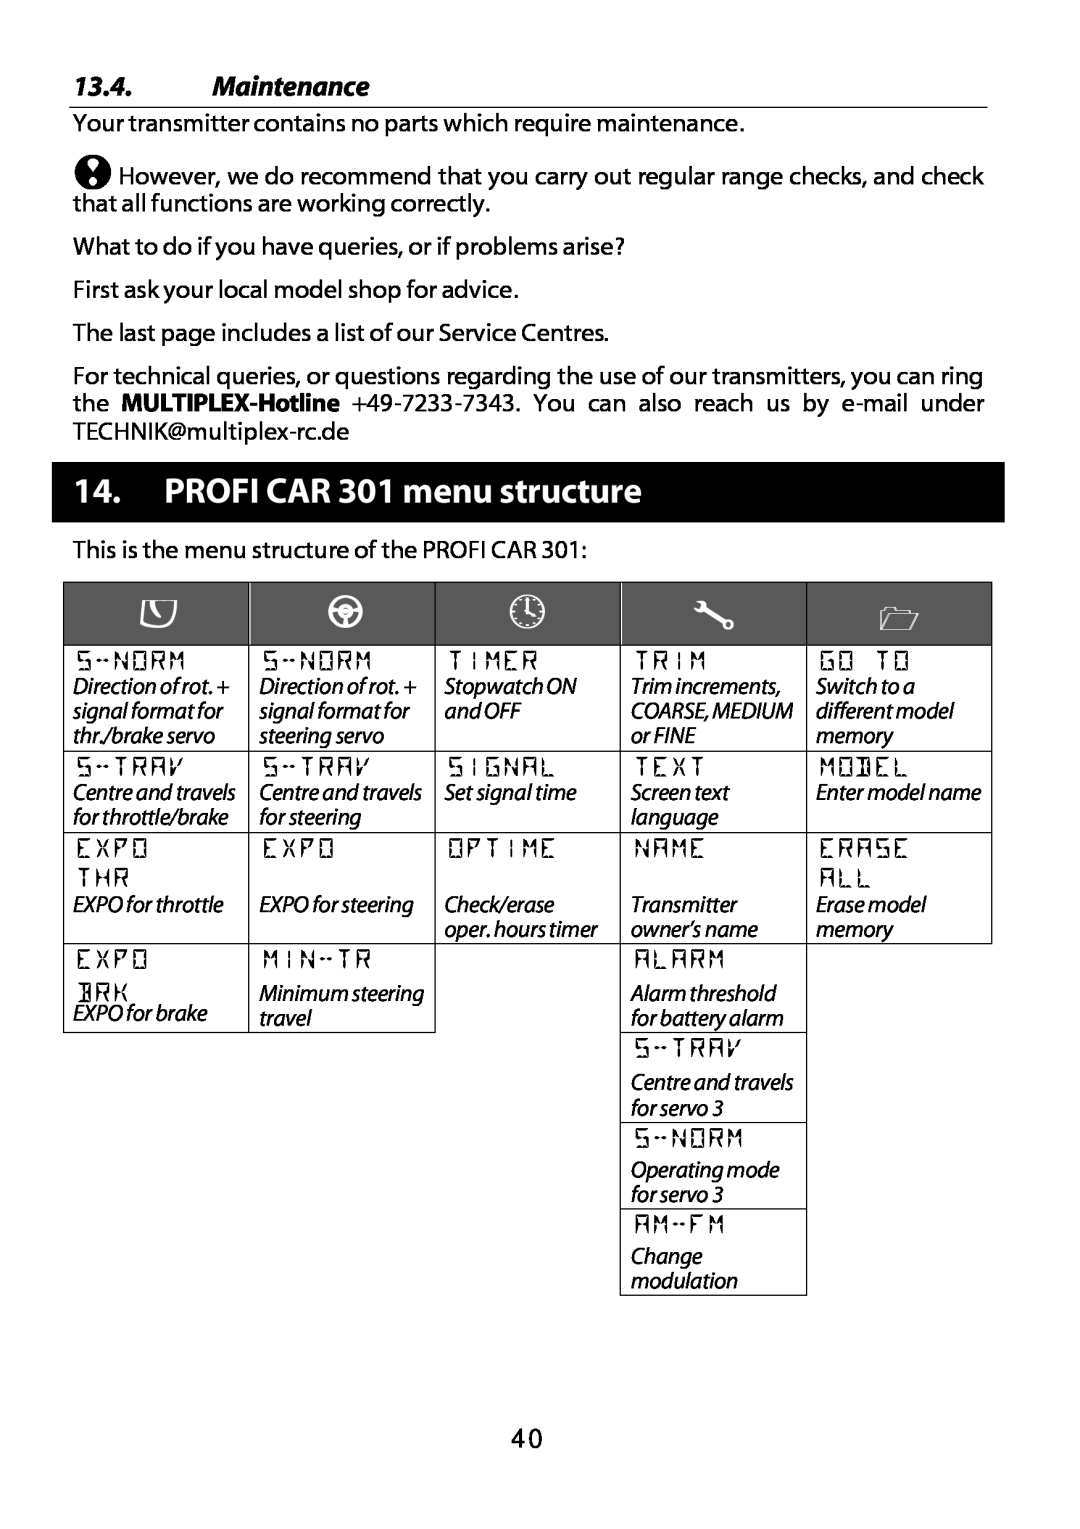 Multiplex Technology manual PROFI CAR 301 menu structure, Maintenance 